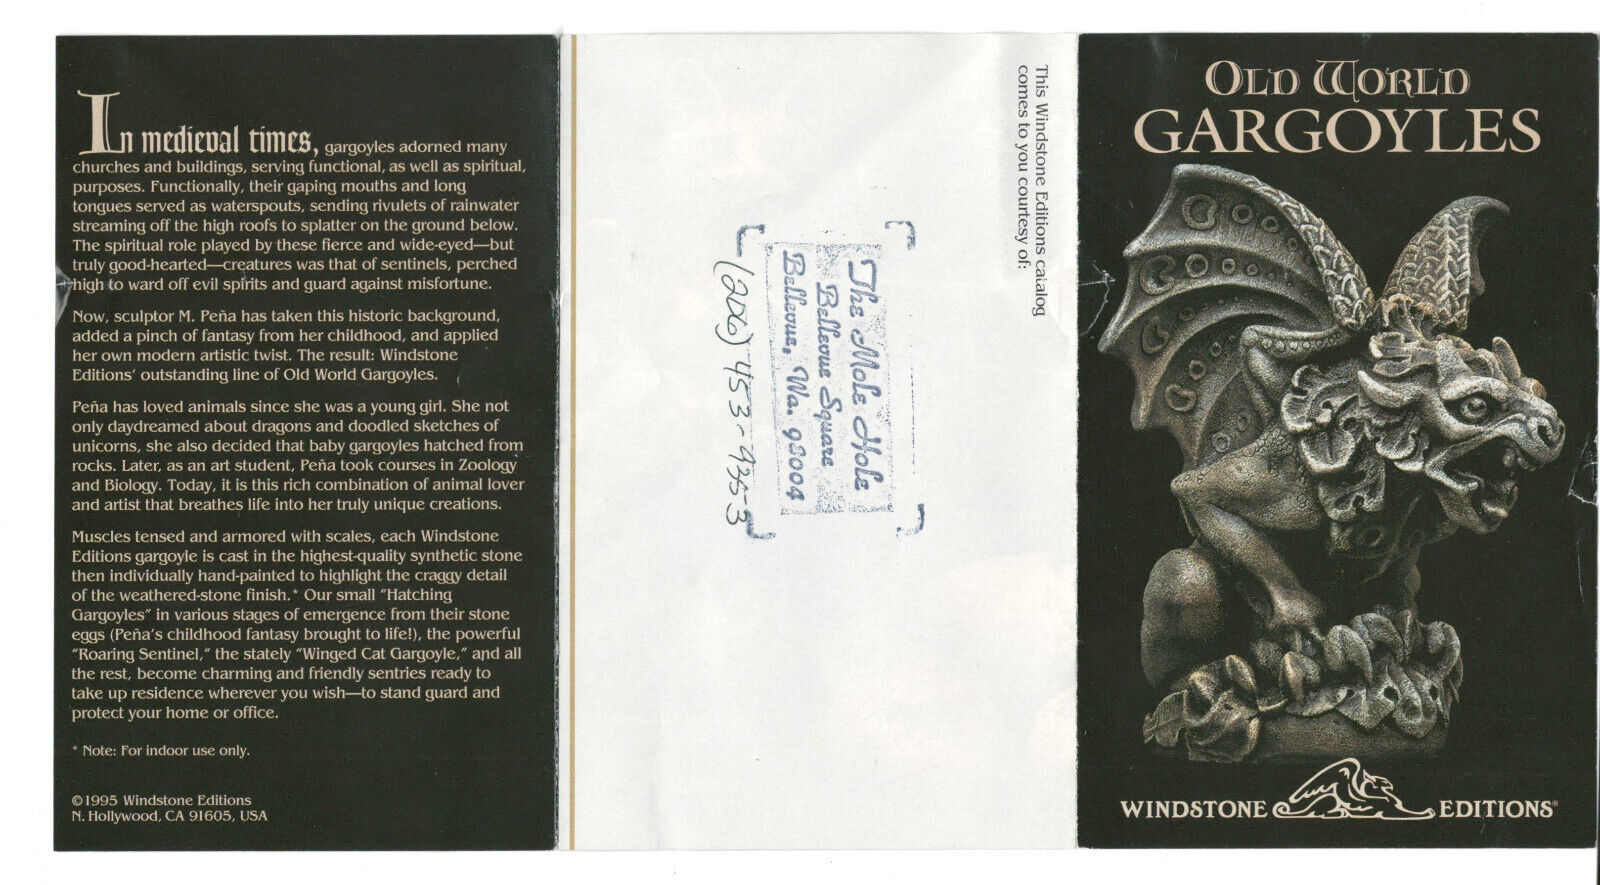 Windstone Editions 1995 Old World Gargoyles Cat Pena Catalog Brochure